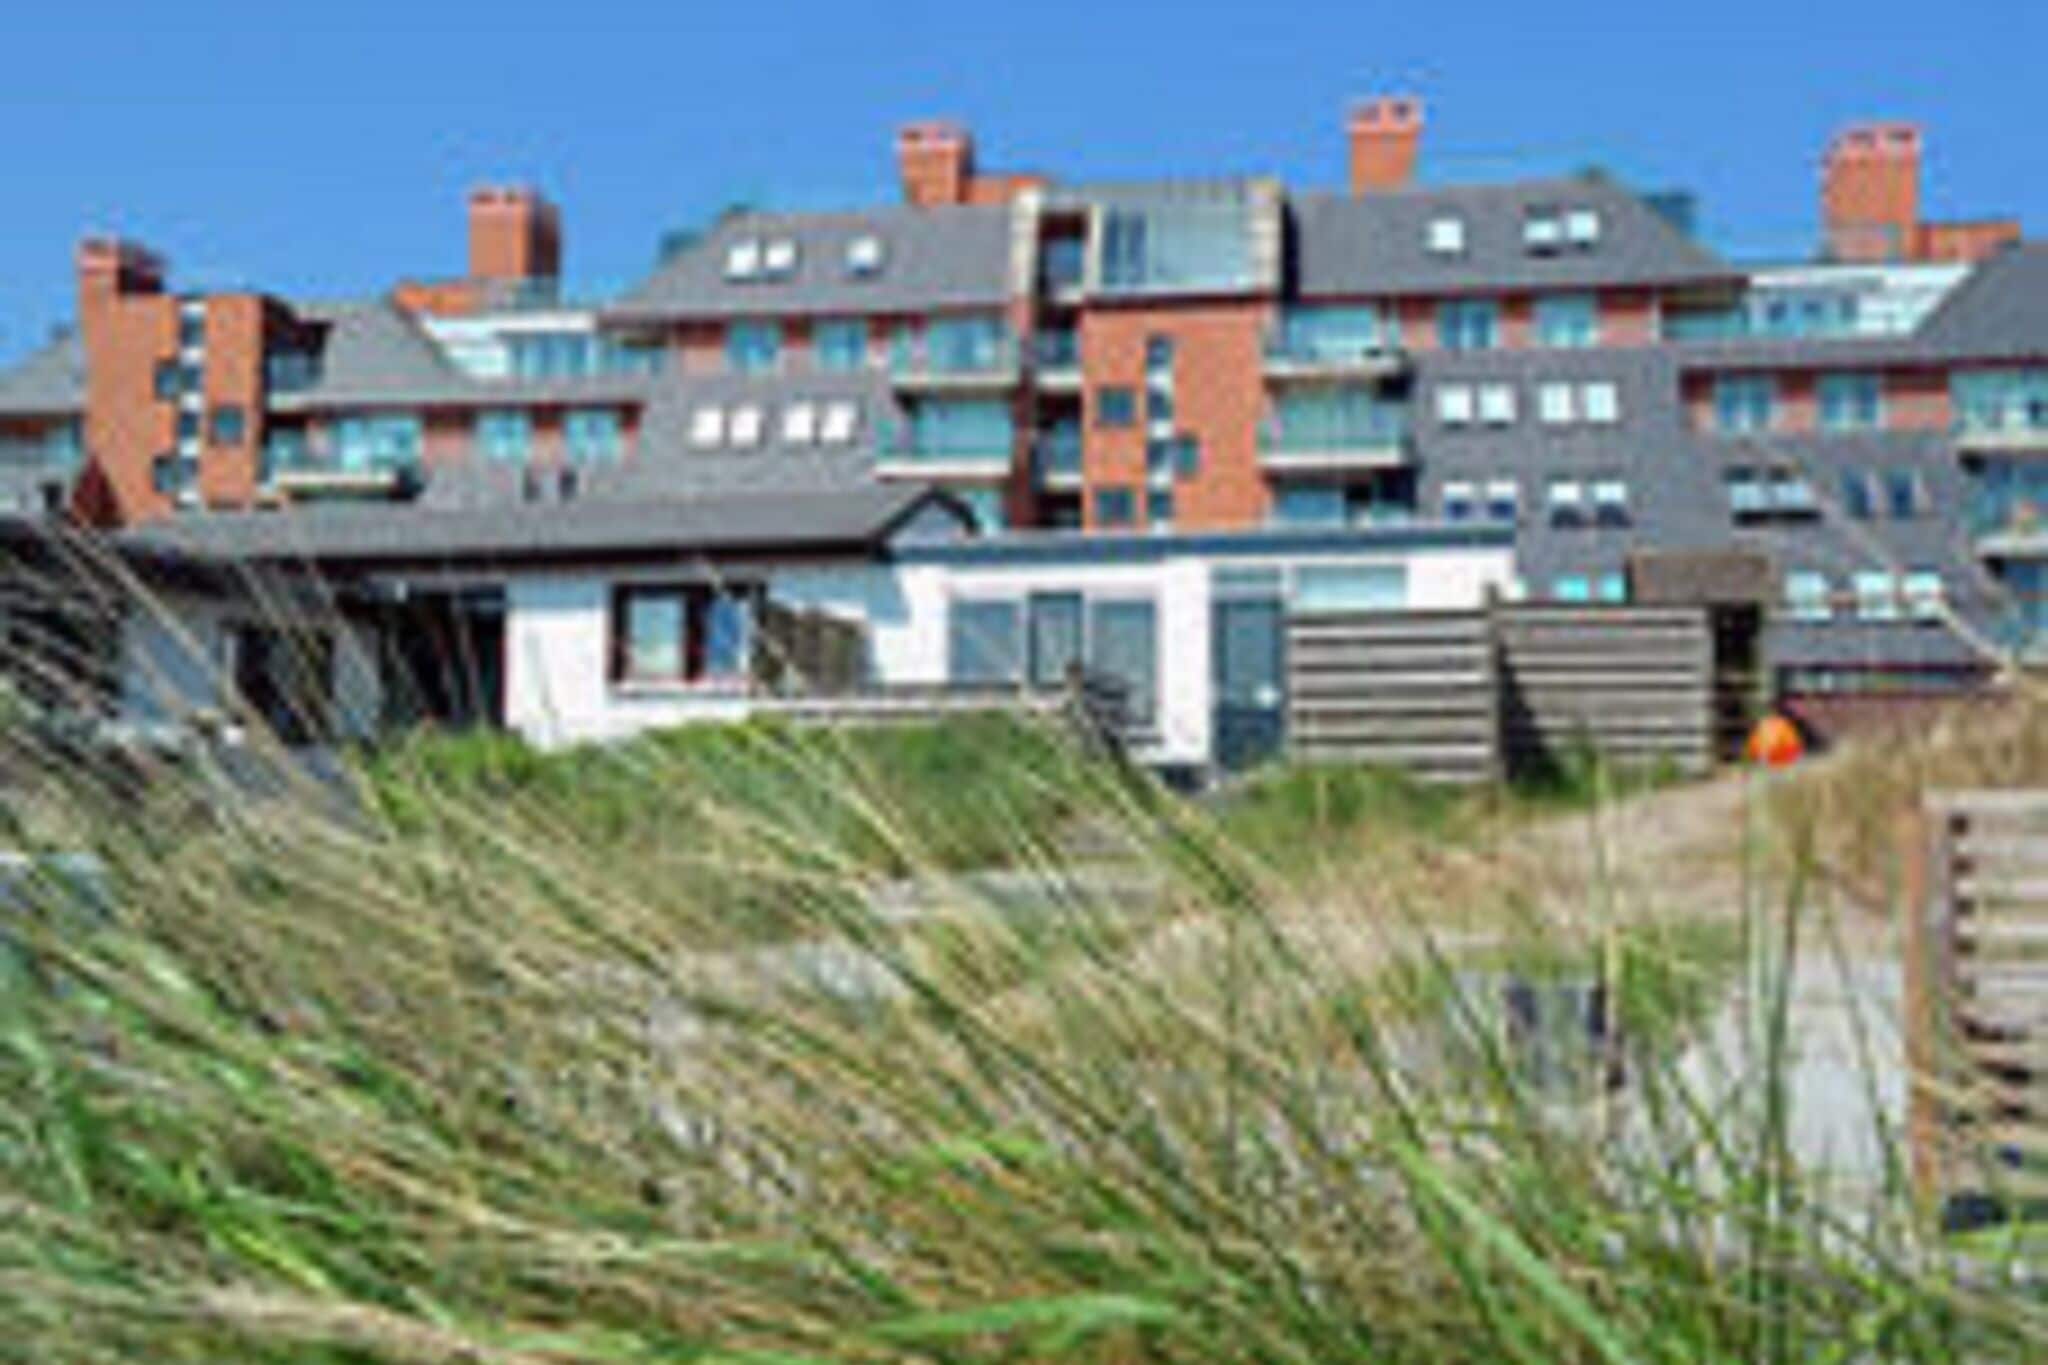 Holiday home near the beach of Egmond aan Zee